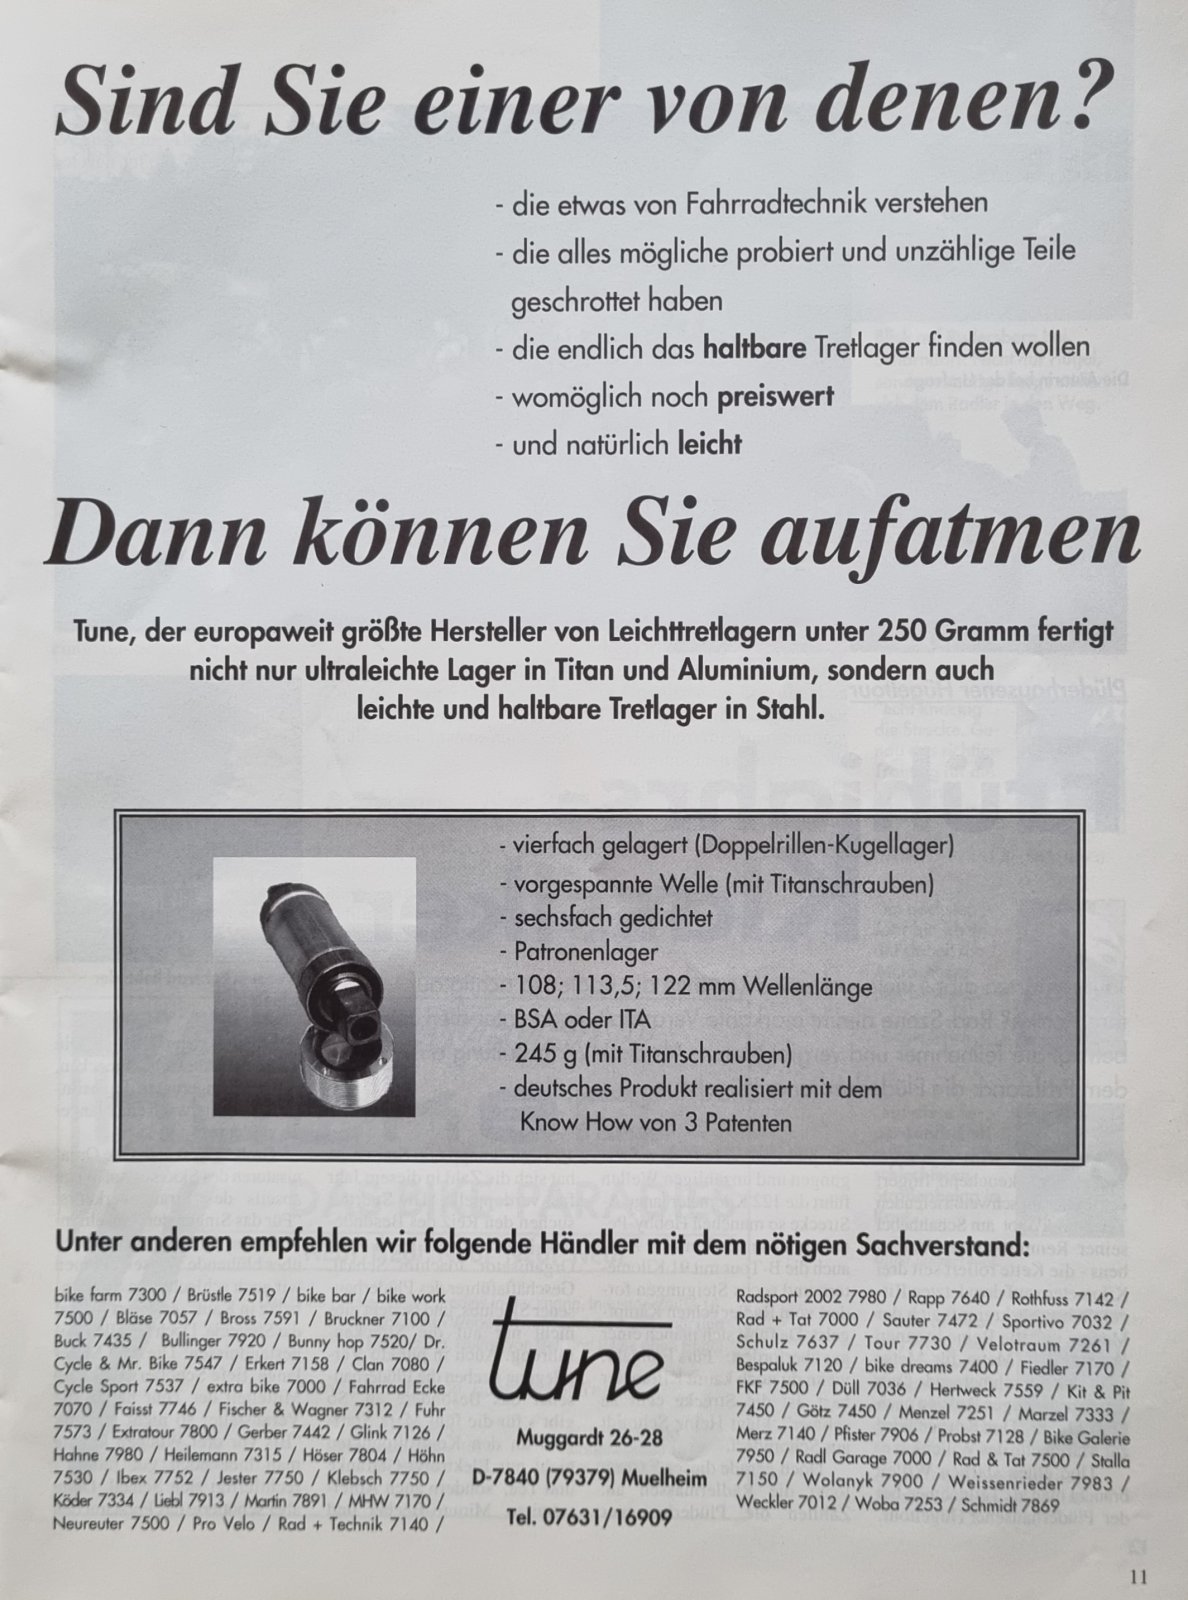 Tune Ad aus Radszene regional 2 1993.jpg